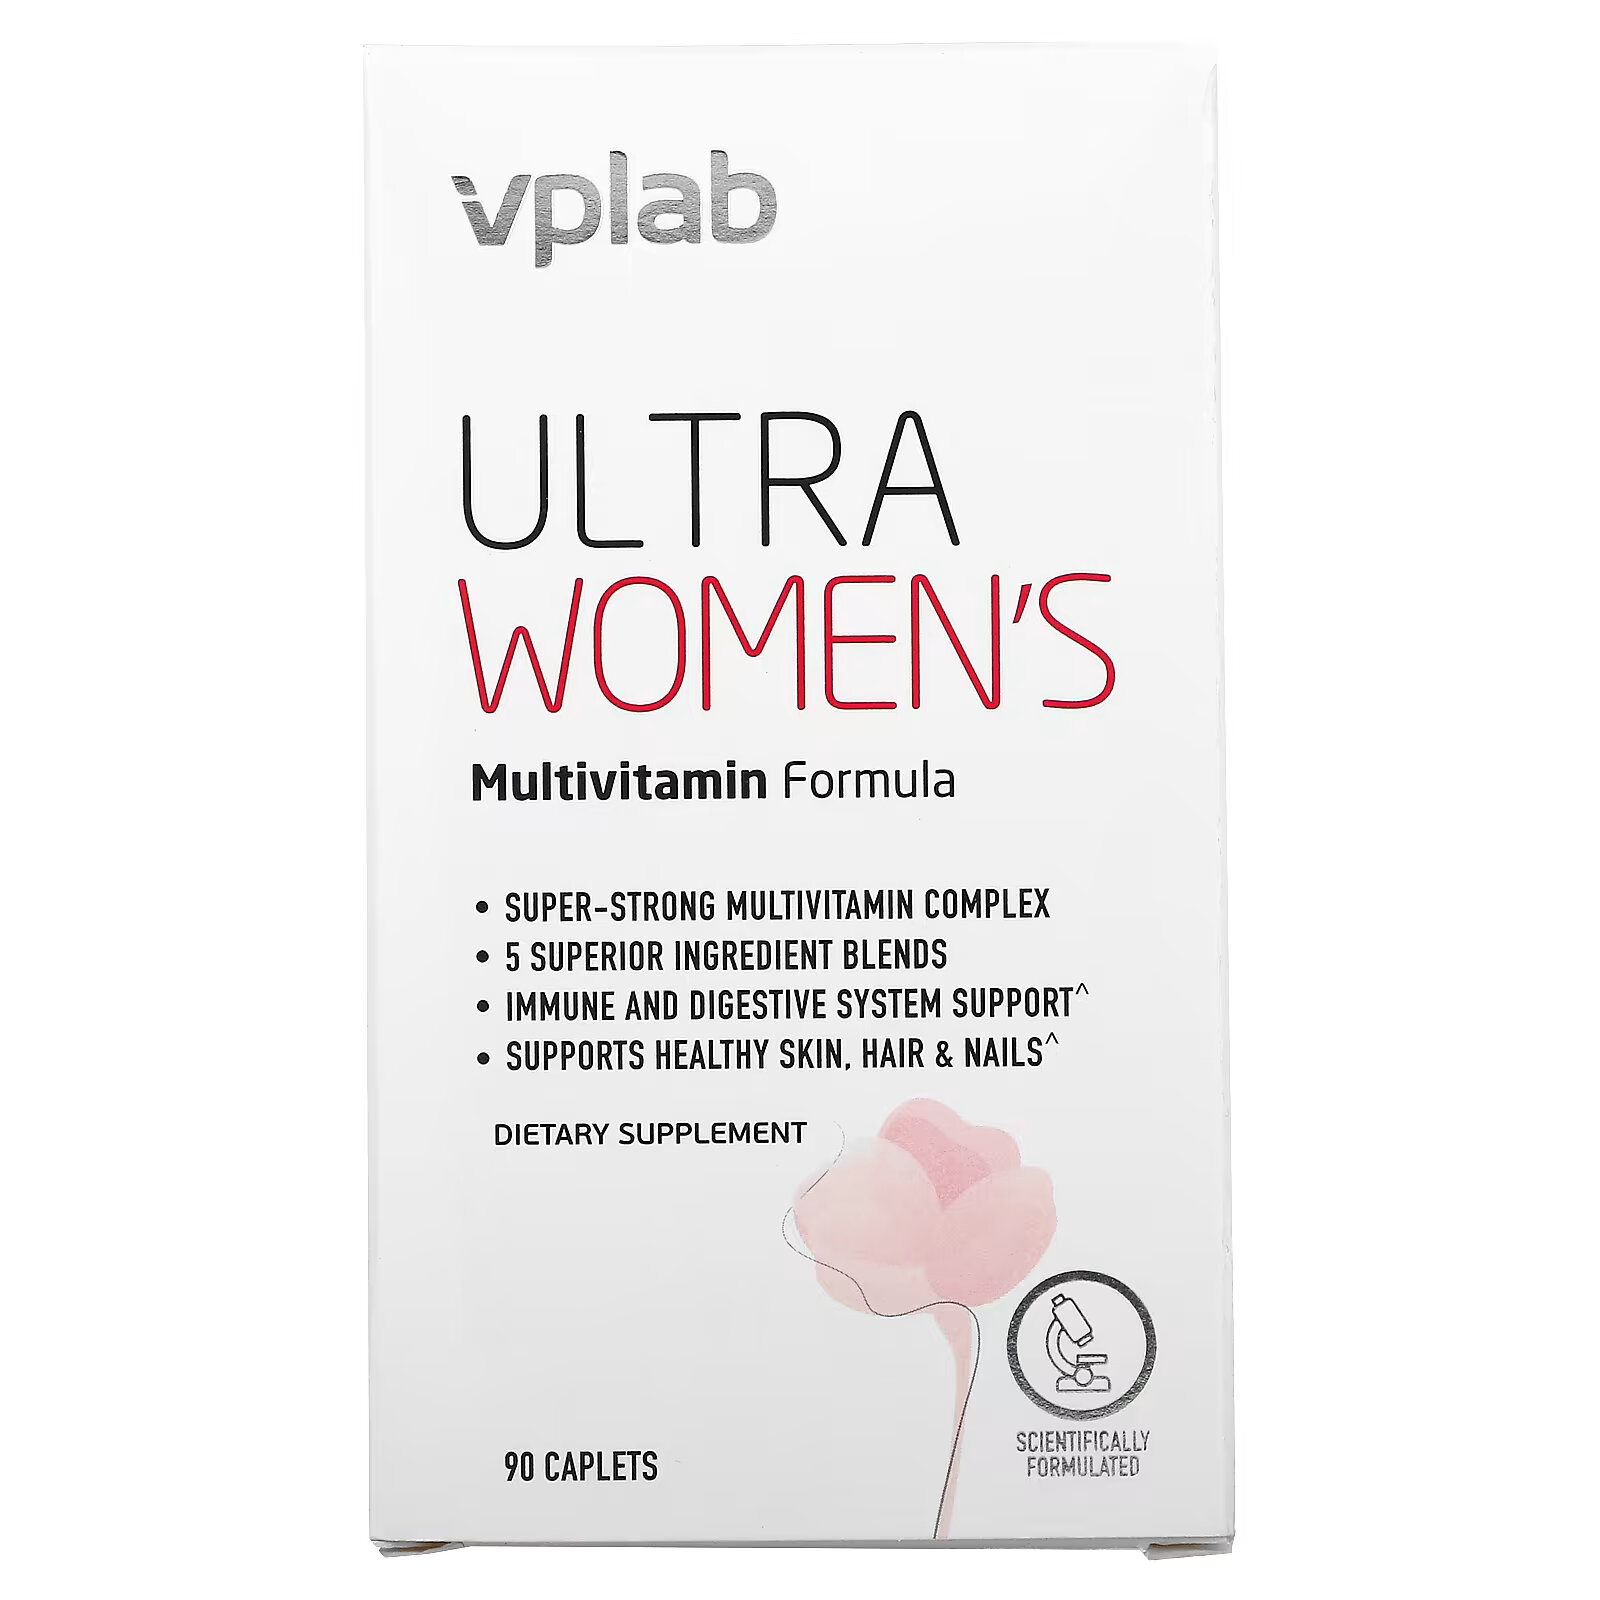 Vplab, Ultra Women’s, мультивитамины для женщин, 90 капсул vplab мультивитаминный комплекс для мужчин multivitamin formula 90 таблеток vplab ultra men s